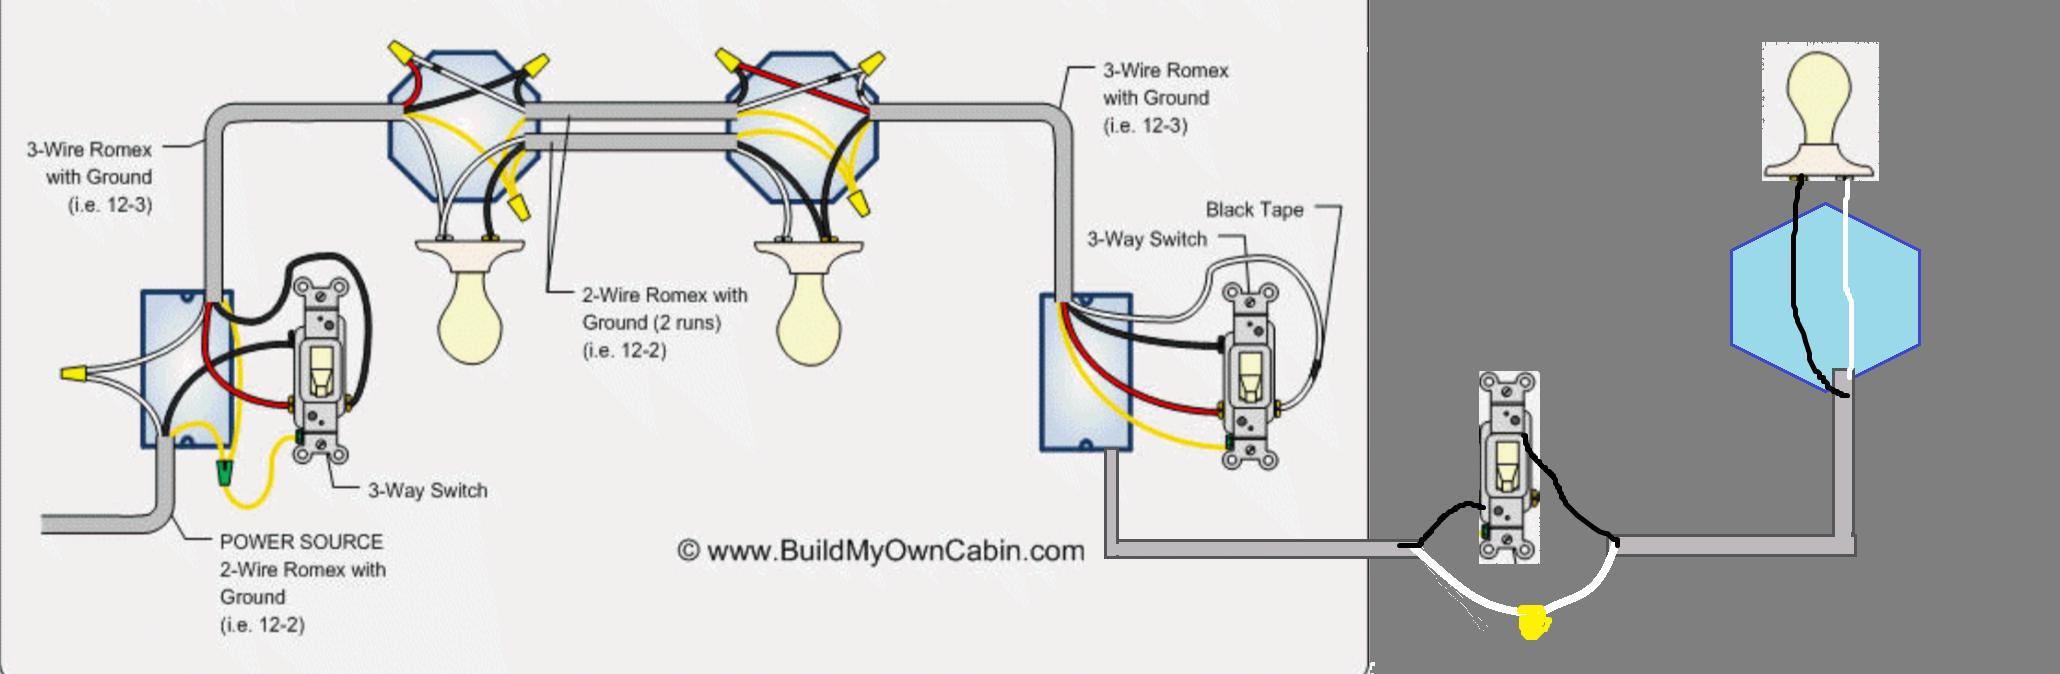 Three Way Switch Wiring Diagram 2wire 2 Way Switch Wiring Diagram Wiring Diagram Review